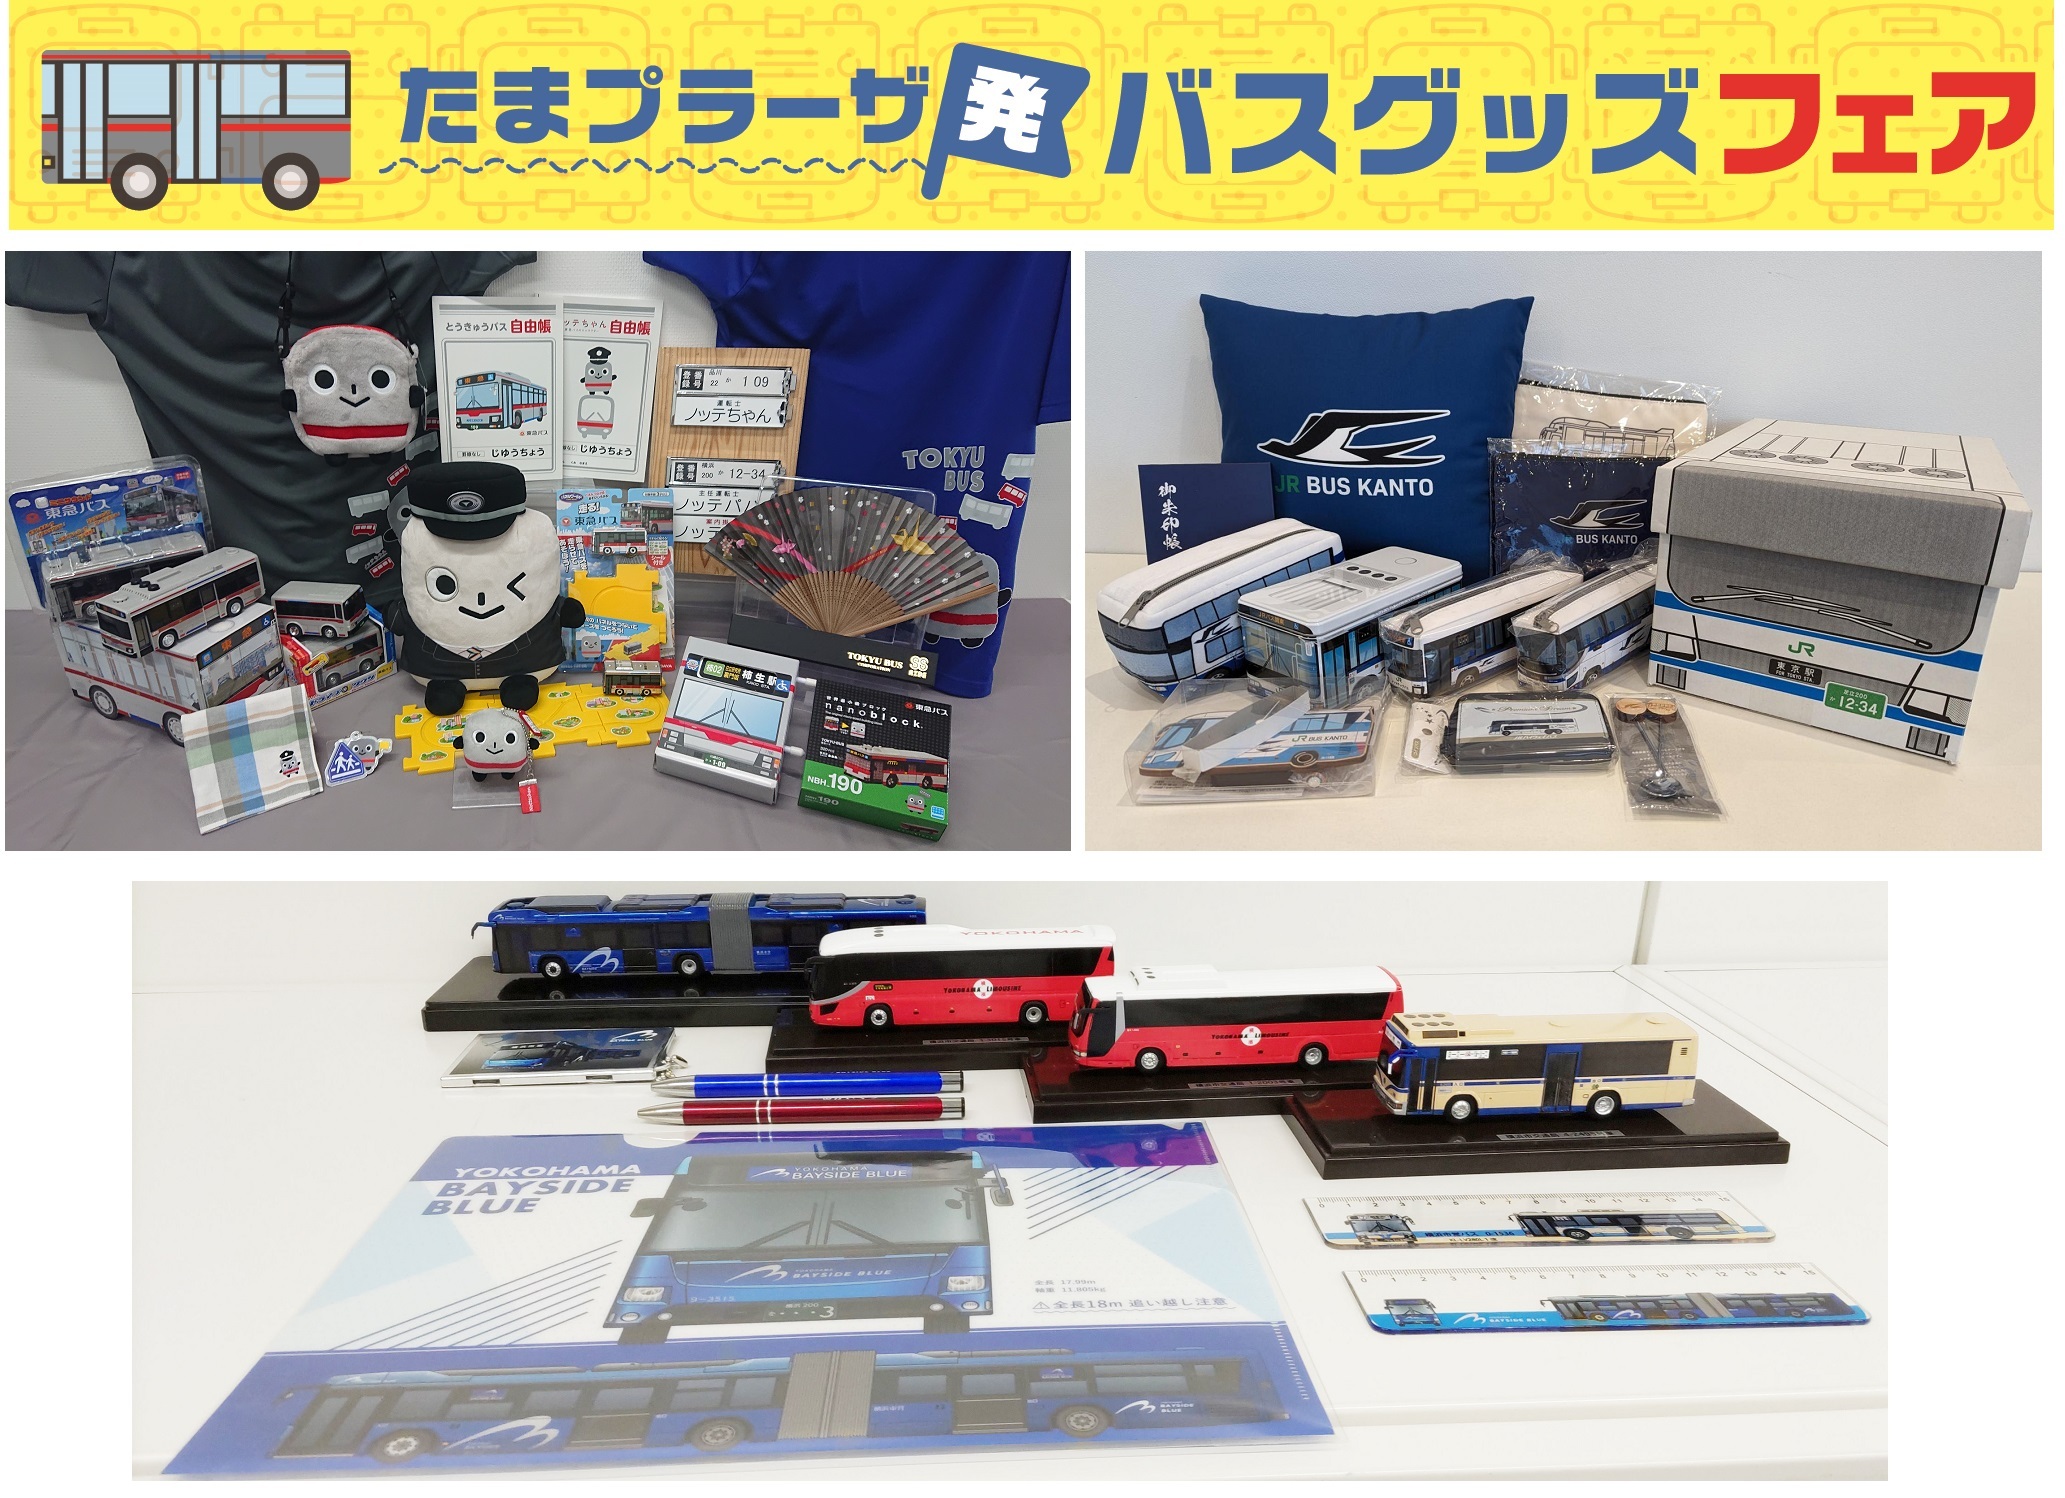 SkyDriveと九州旅客鉄道株式会社が「空飛ぶクルマ」運航を目指し連携協定締結